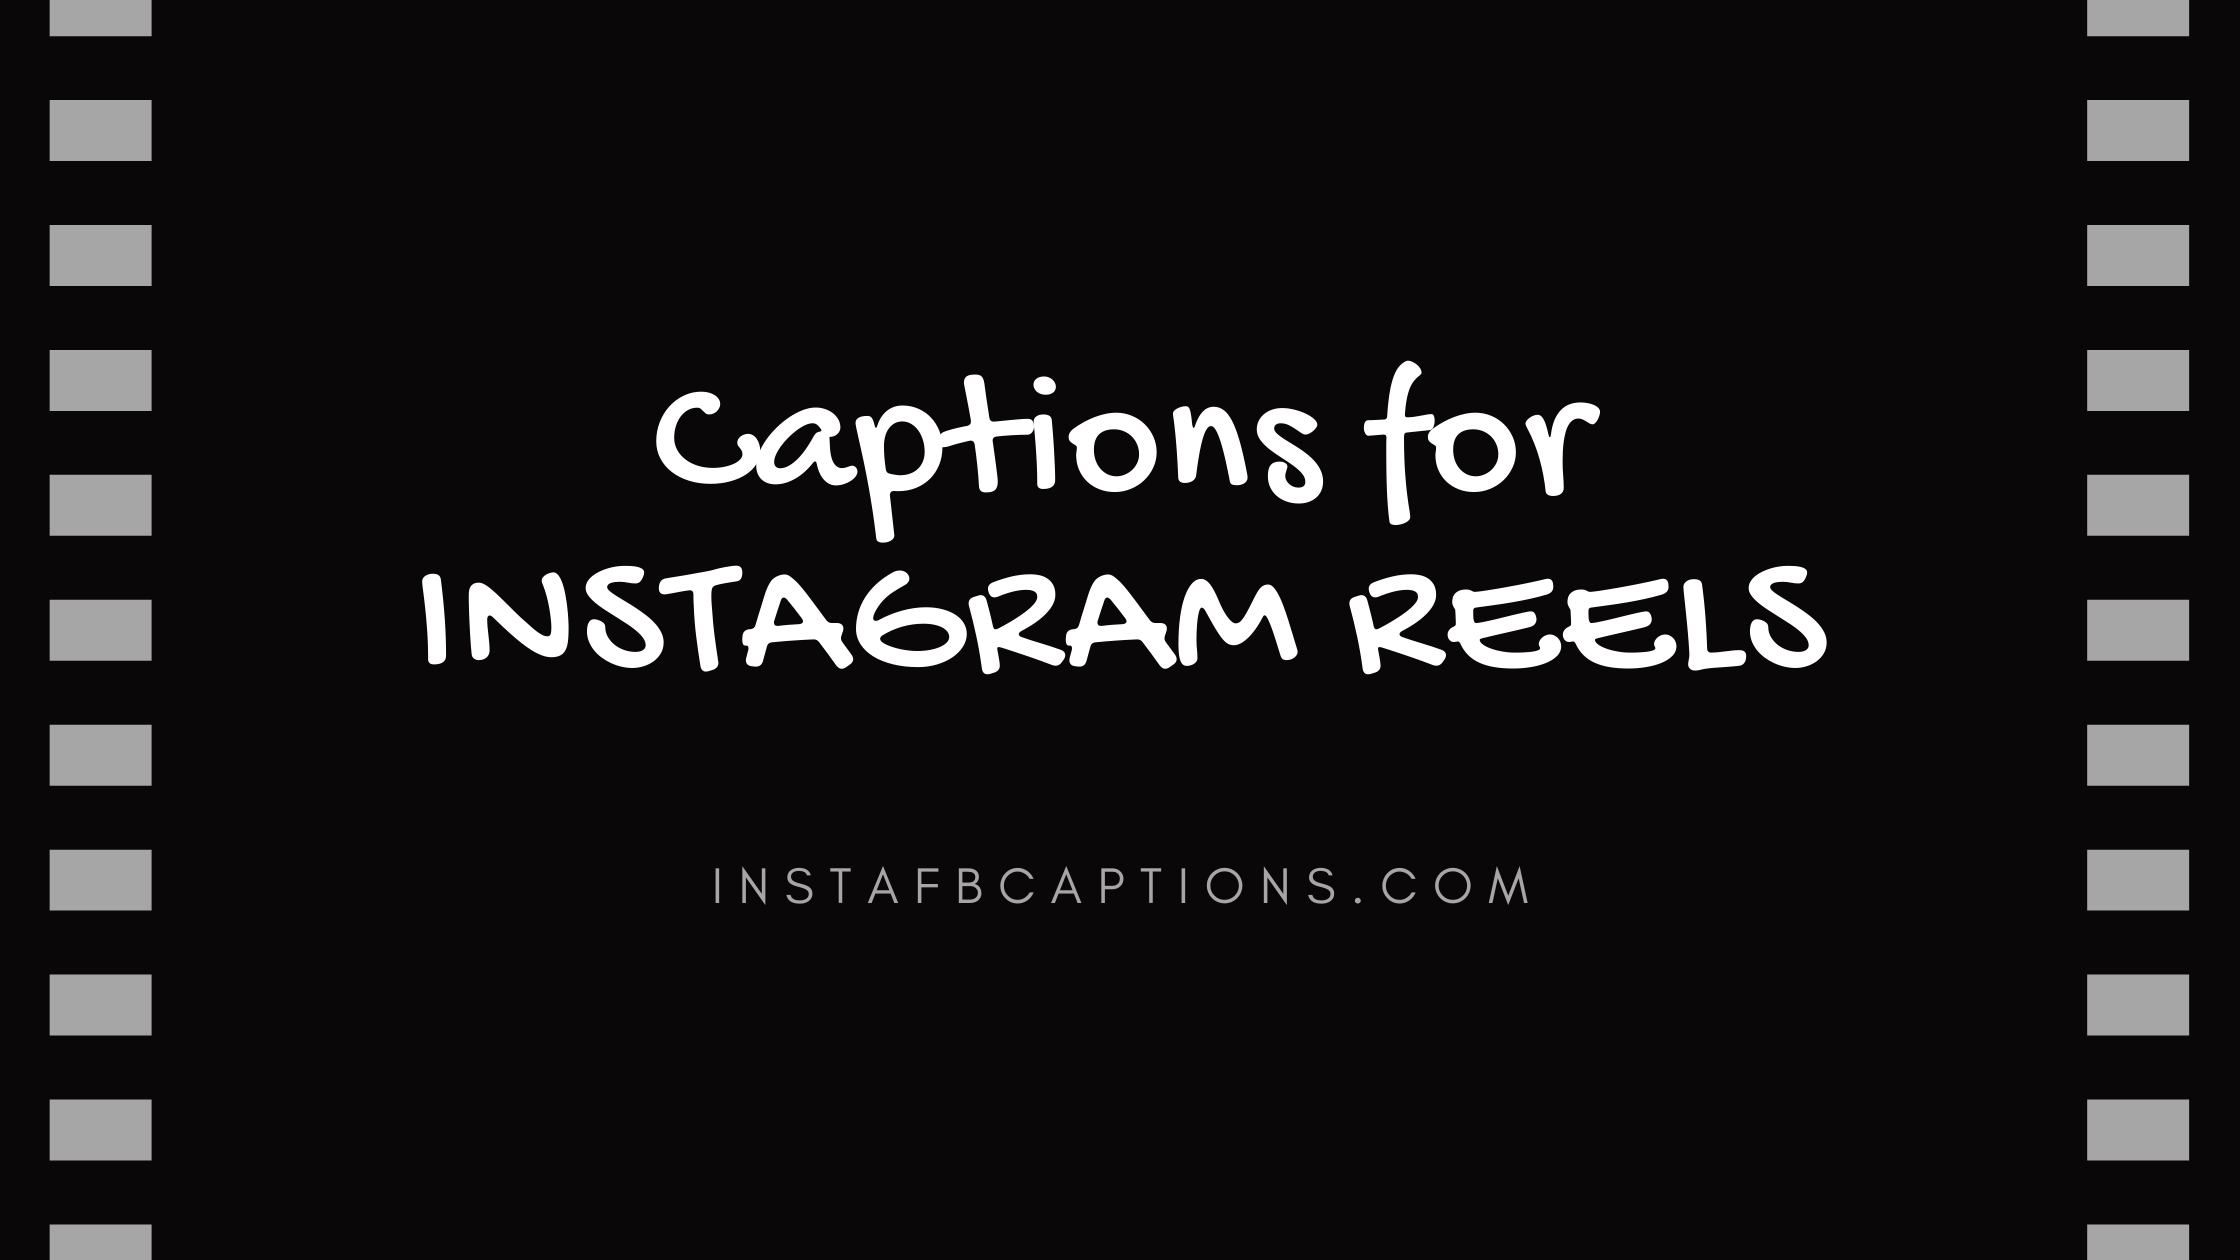 Captions For Instagram Reels | InstaFbCaptions  - Captions for INSTAGRAM REELS - 150+ Popular Captions For Your Classy Reels On Instagram